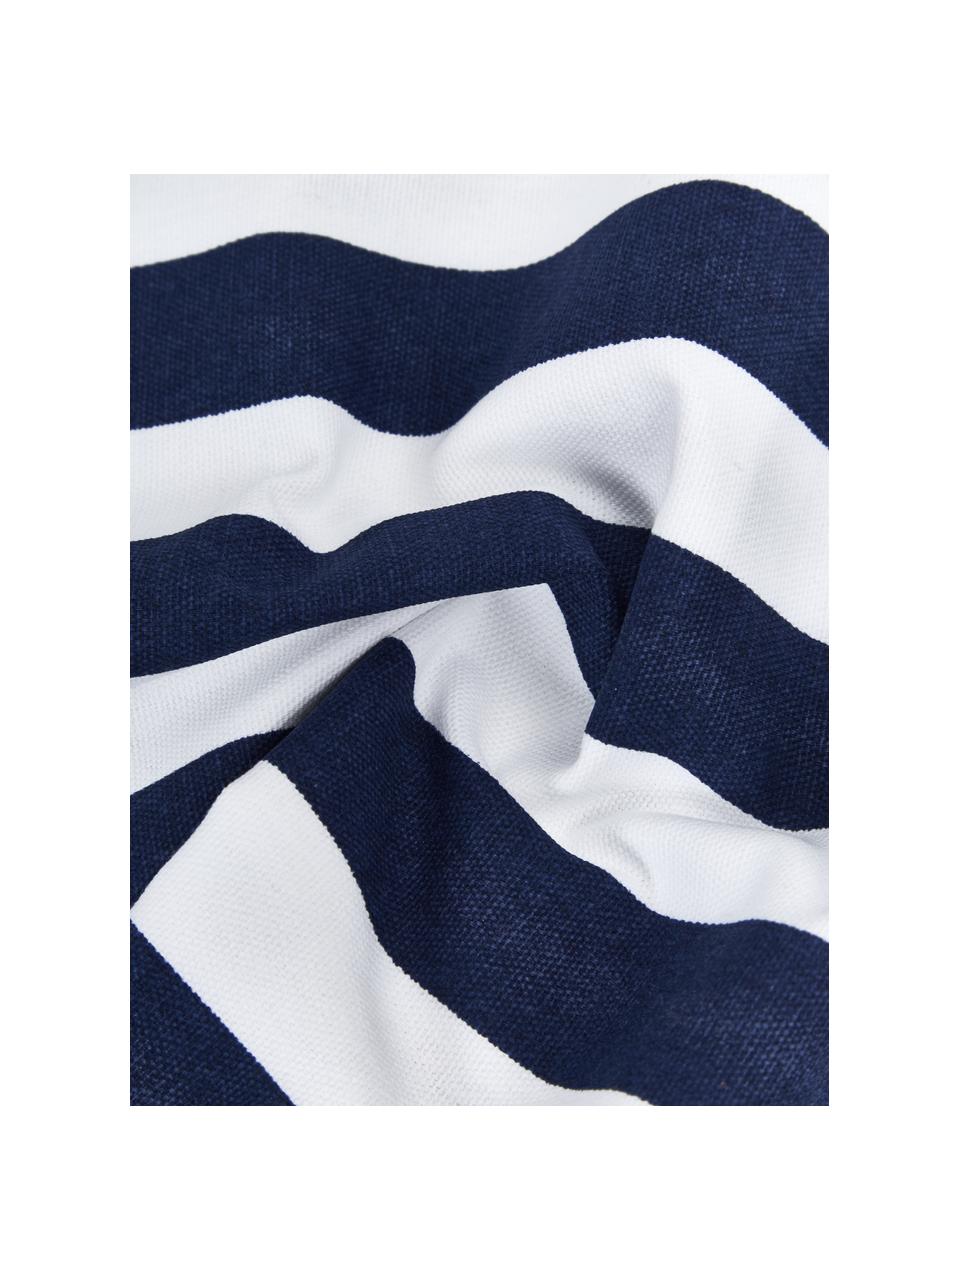 Gestreifte Kissenhülle Timon in Dunkelblau/Weiß, 100% Baumwolle, Blau, 50 x 50 cm